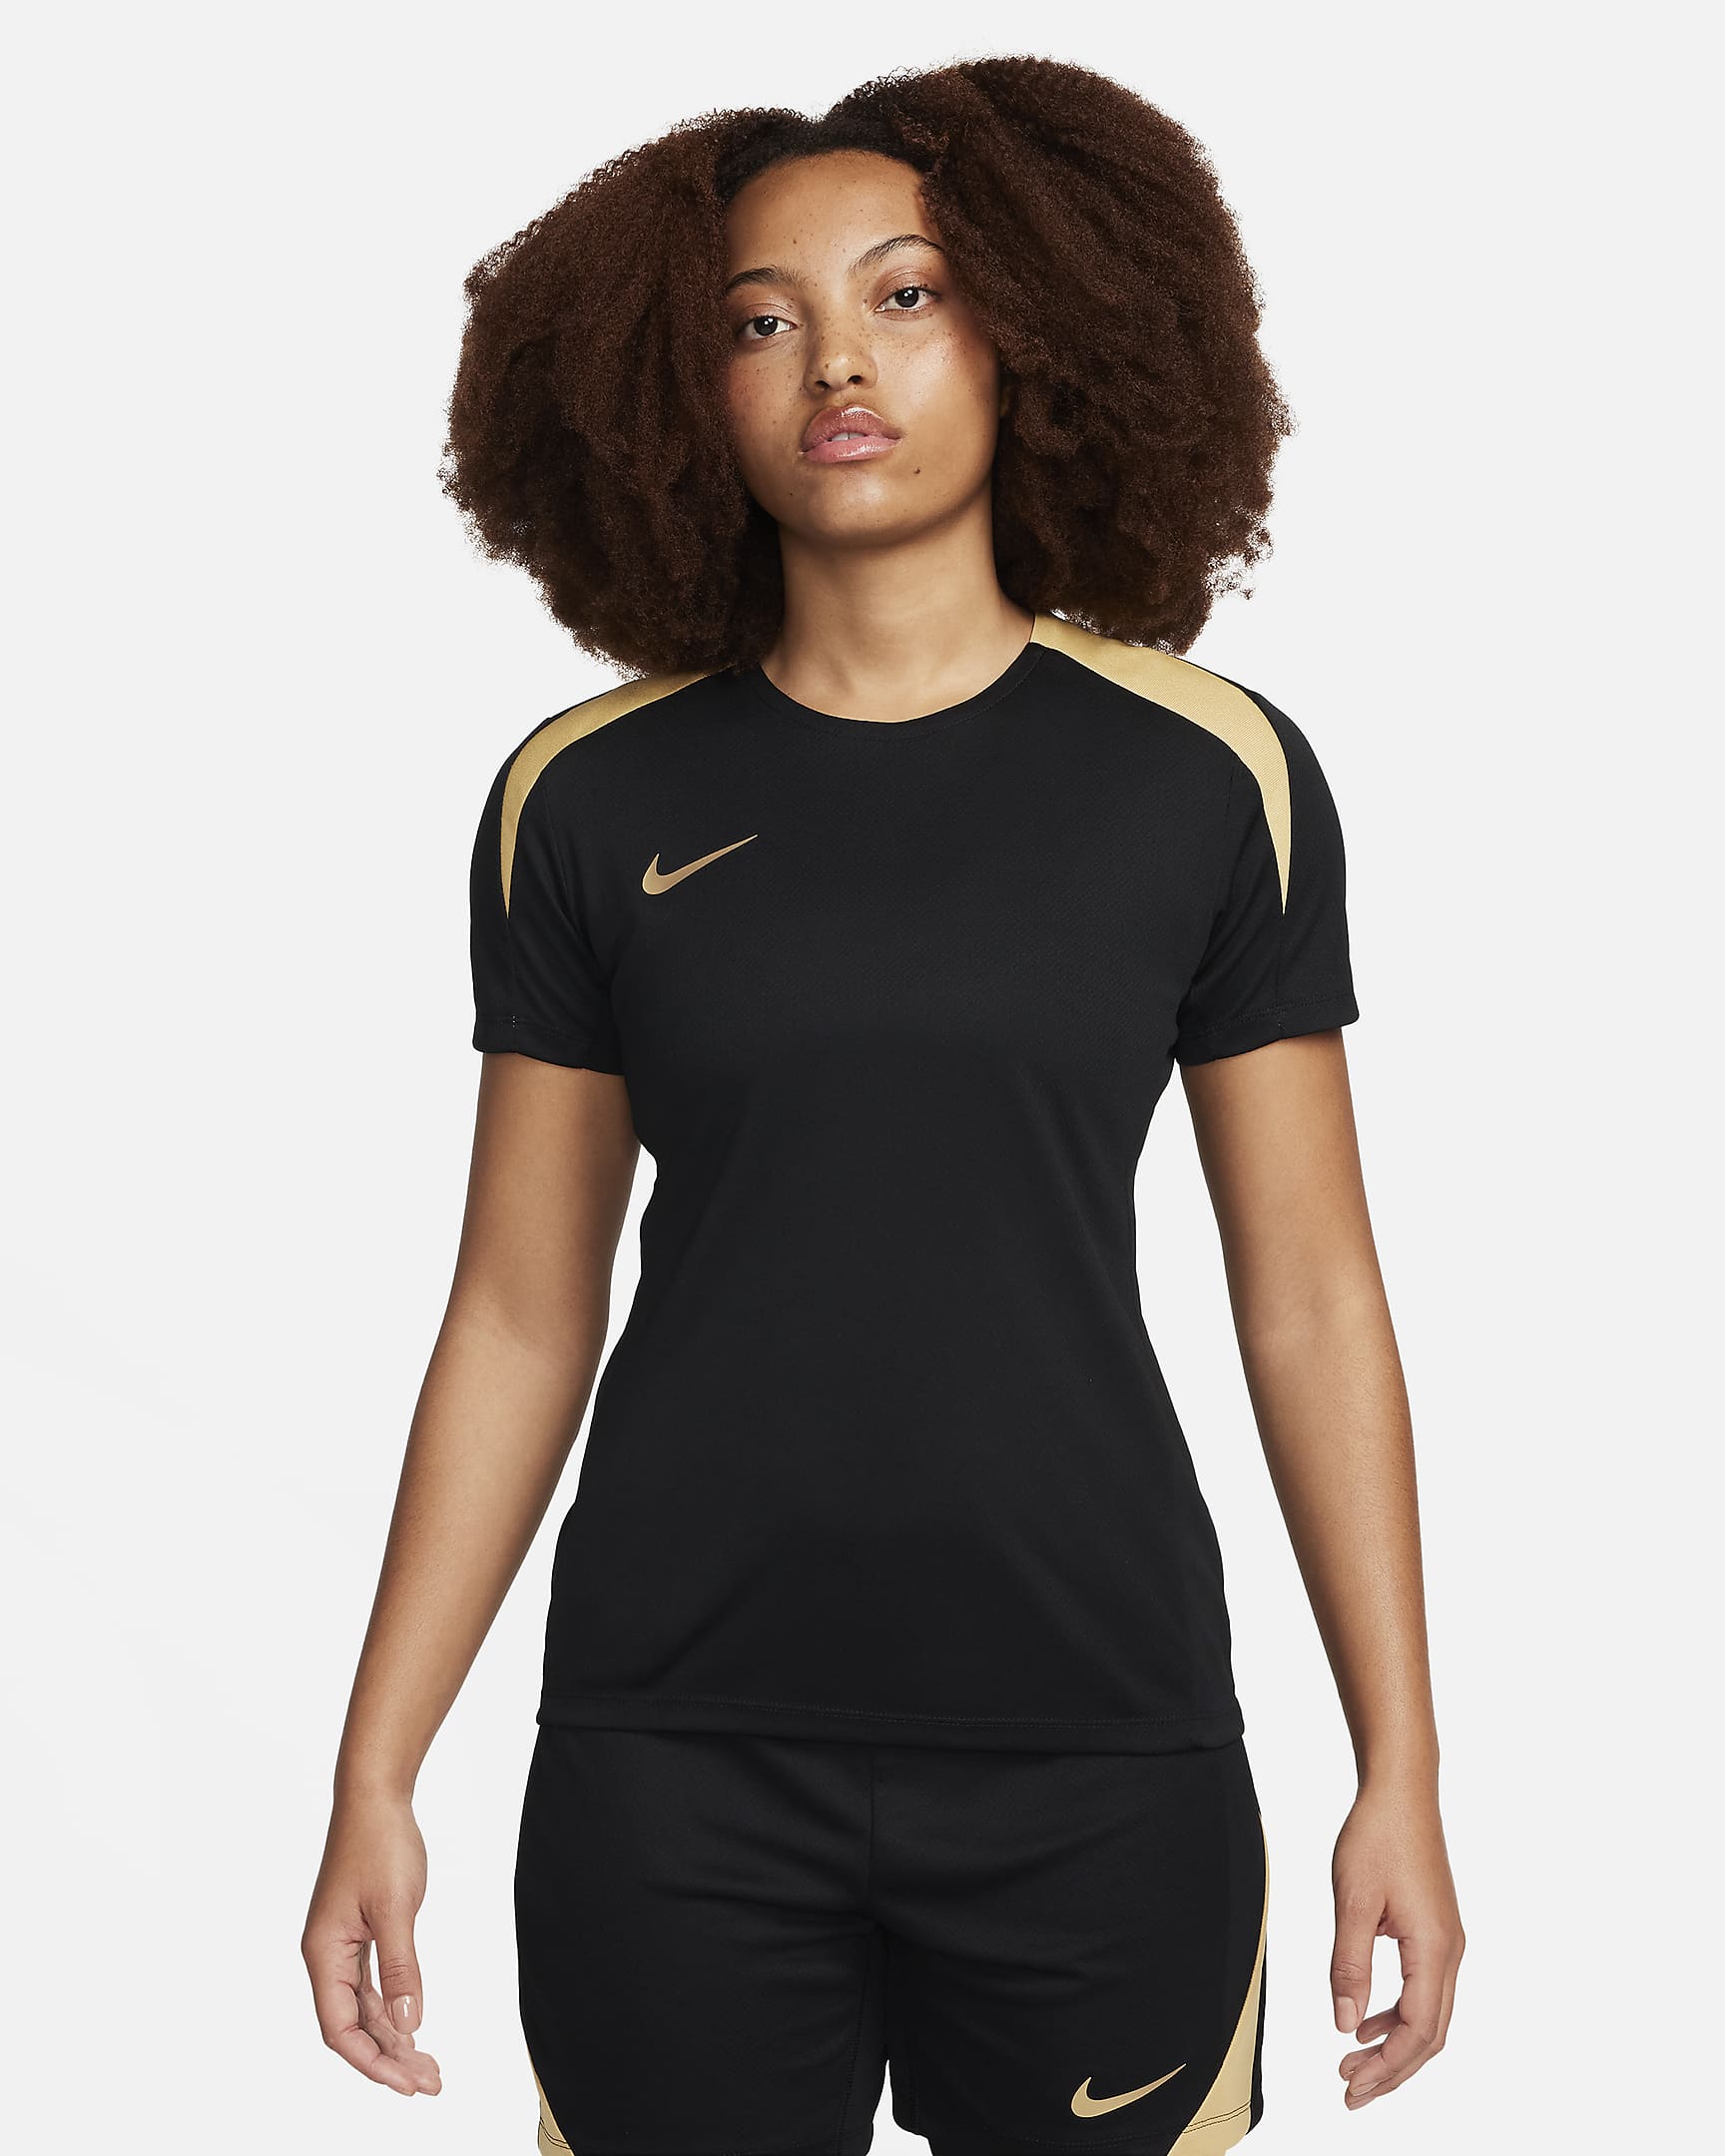 Nike Strike Women's Dri-FIT Short-Sleeve Football Top - Black/Jersey Gold/Metallic Gold